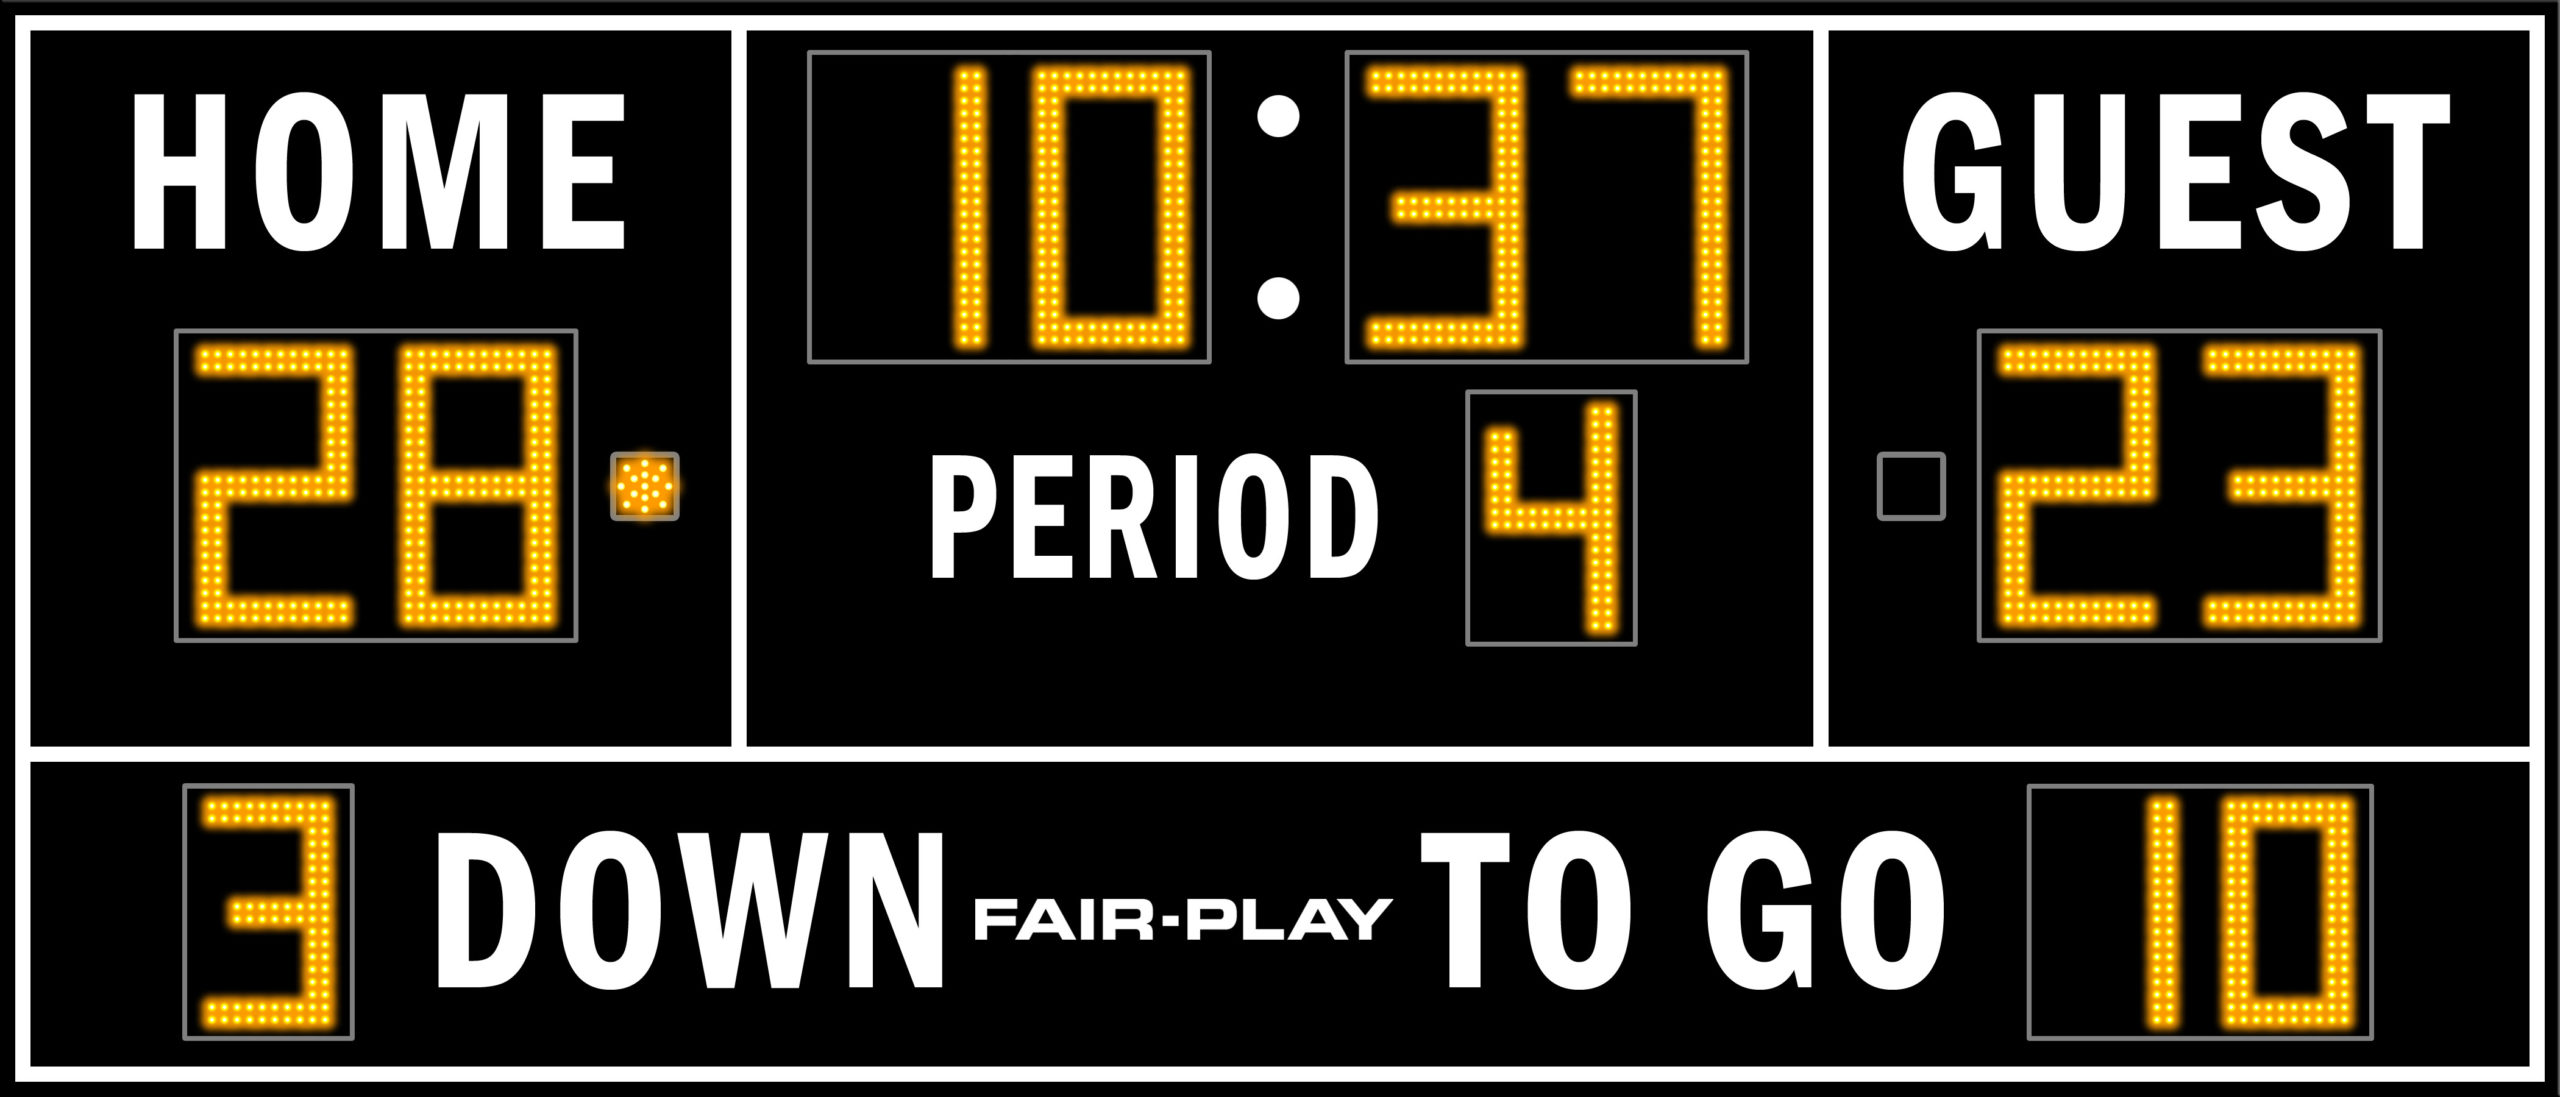 Fair-Play SC-8120-2 Soccer Scoreboard (7' 6 x 20')